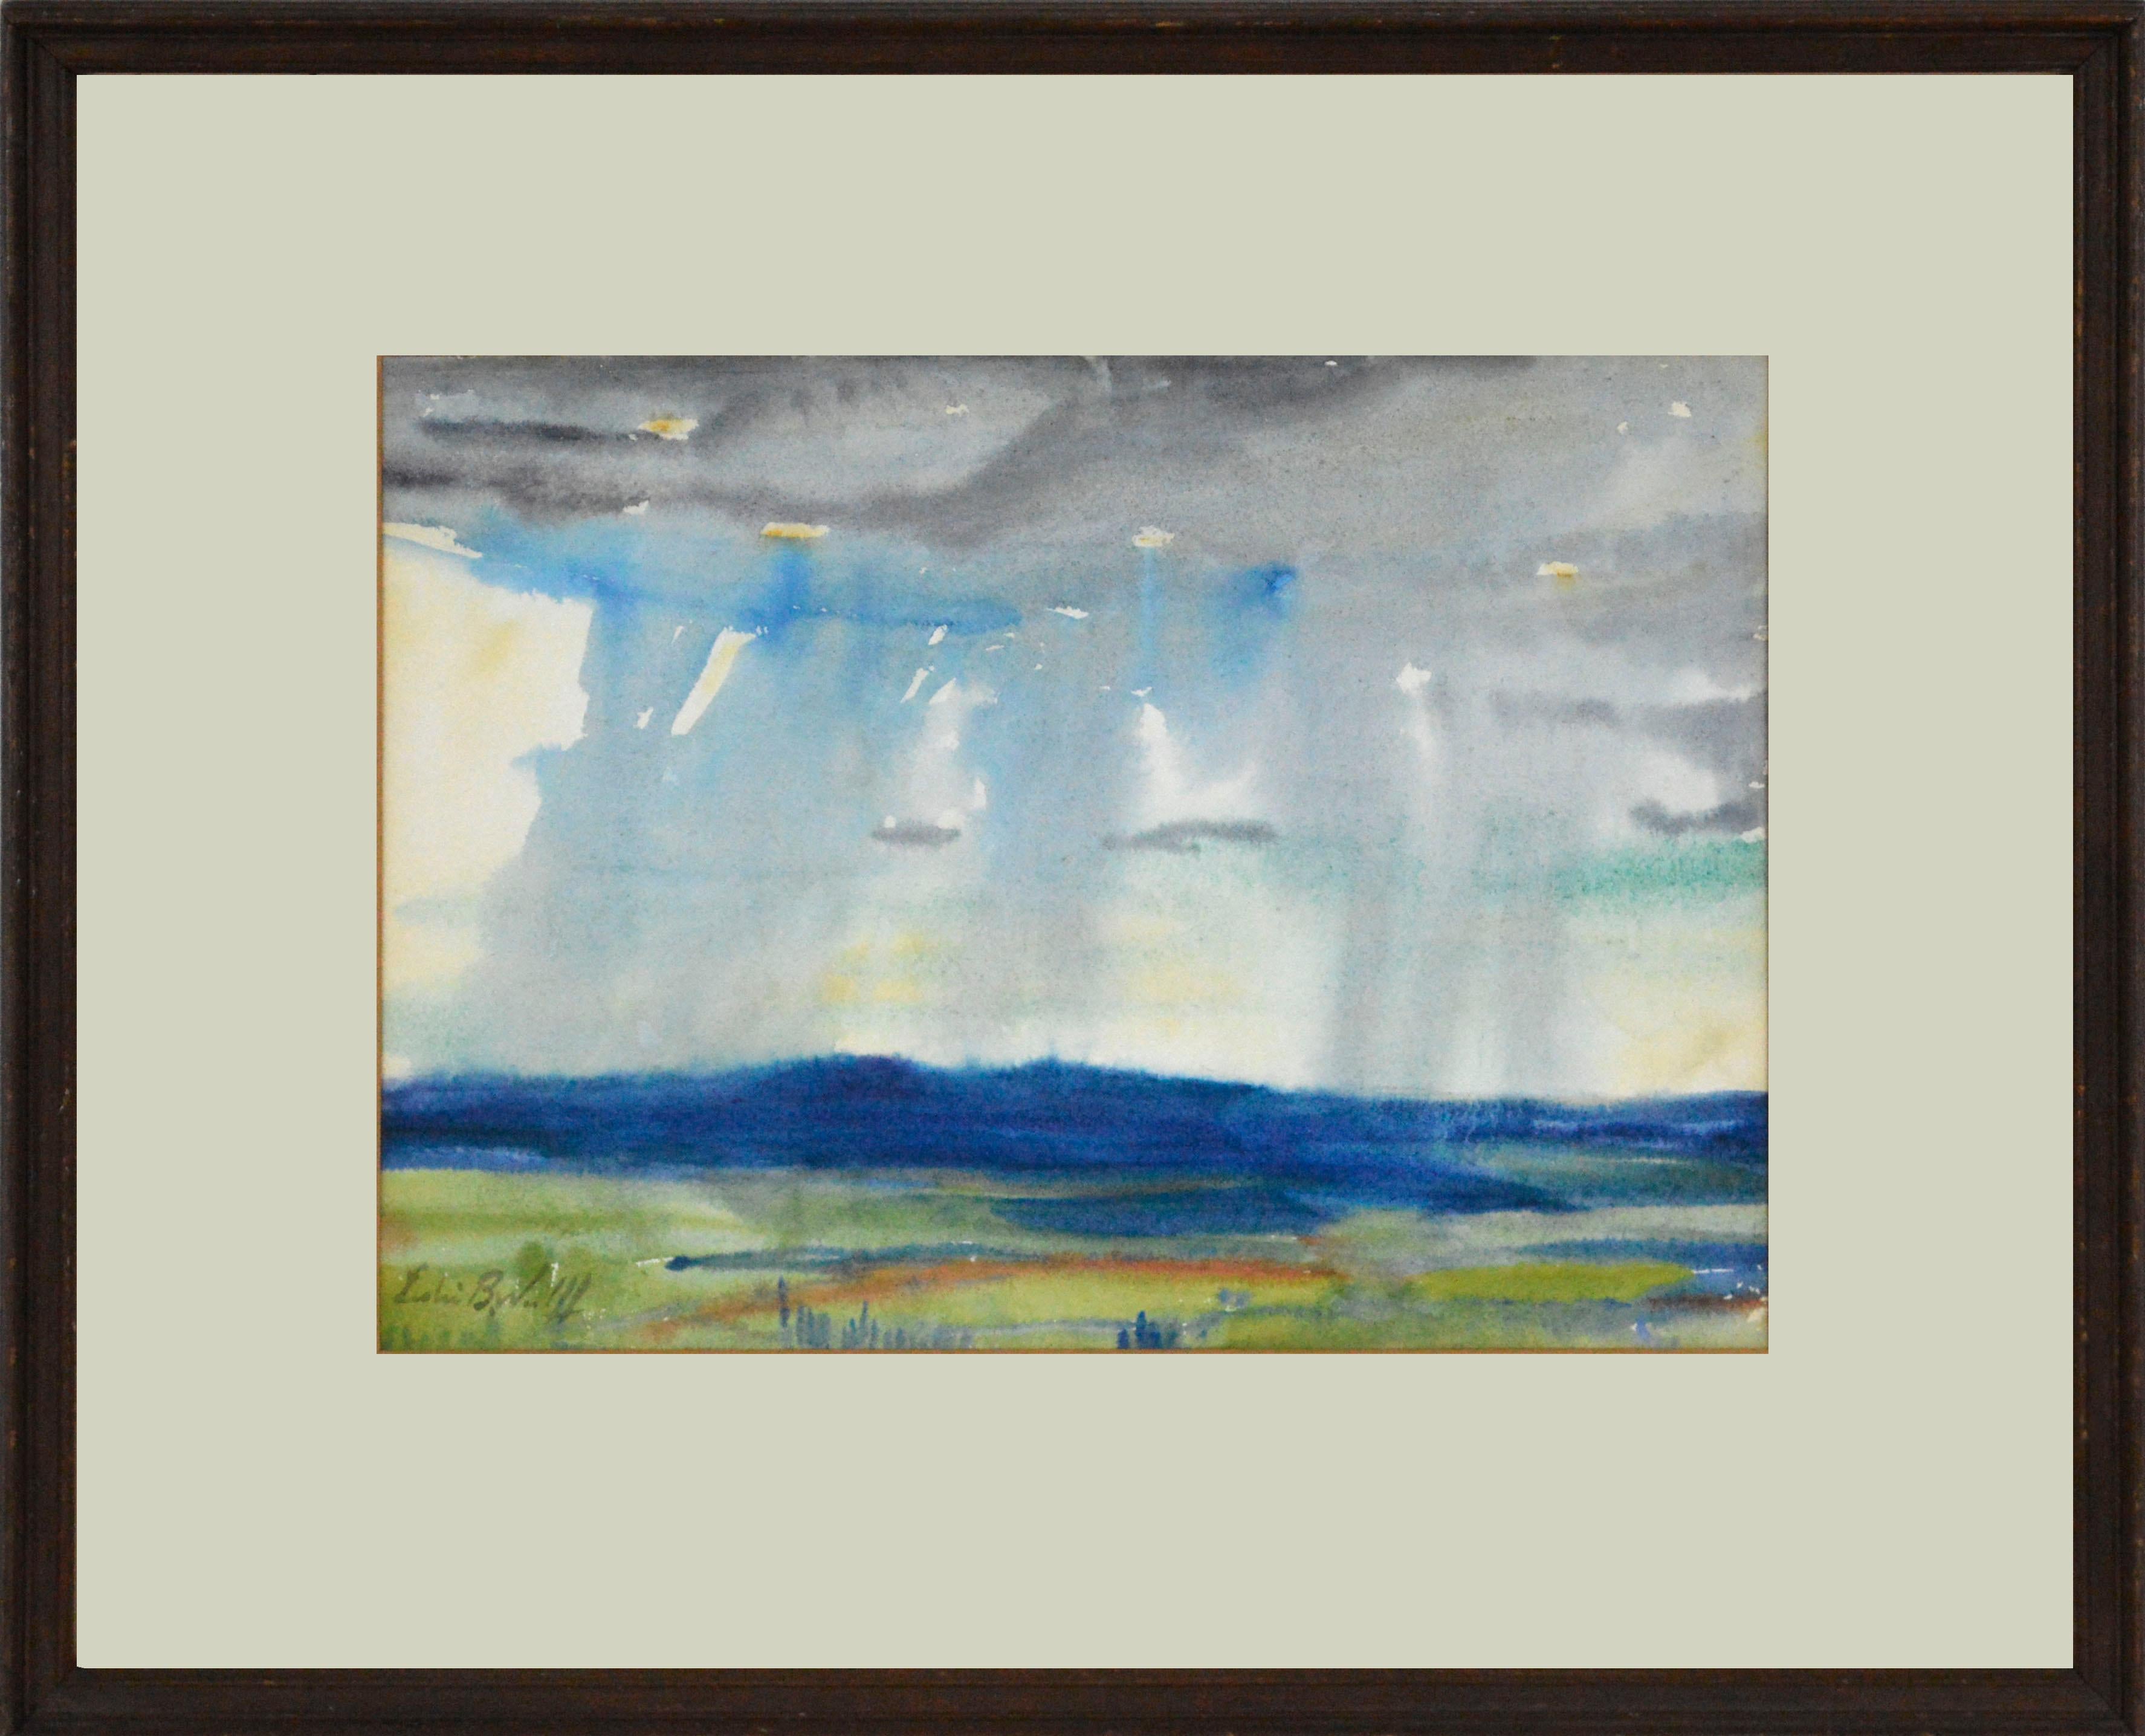 Leslie Bruner Wulff Landscape Art - "Approaching Storm", Mid-1930s California Rainstorm Landscape Watercolor 